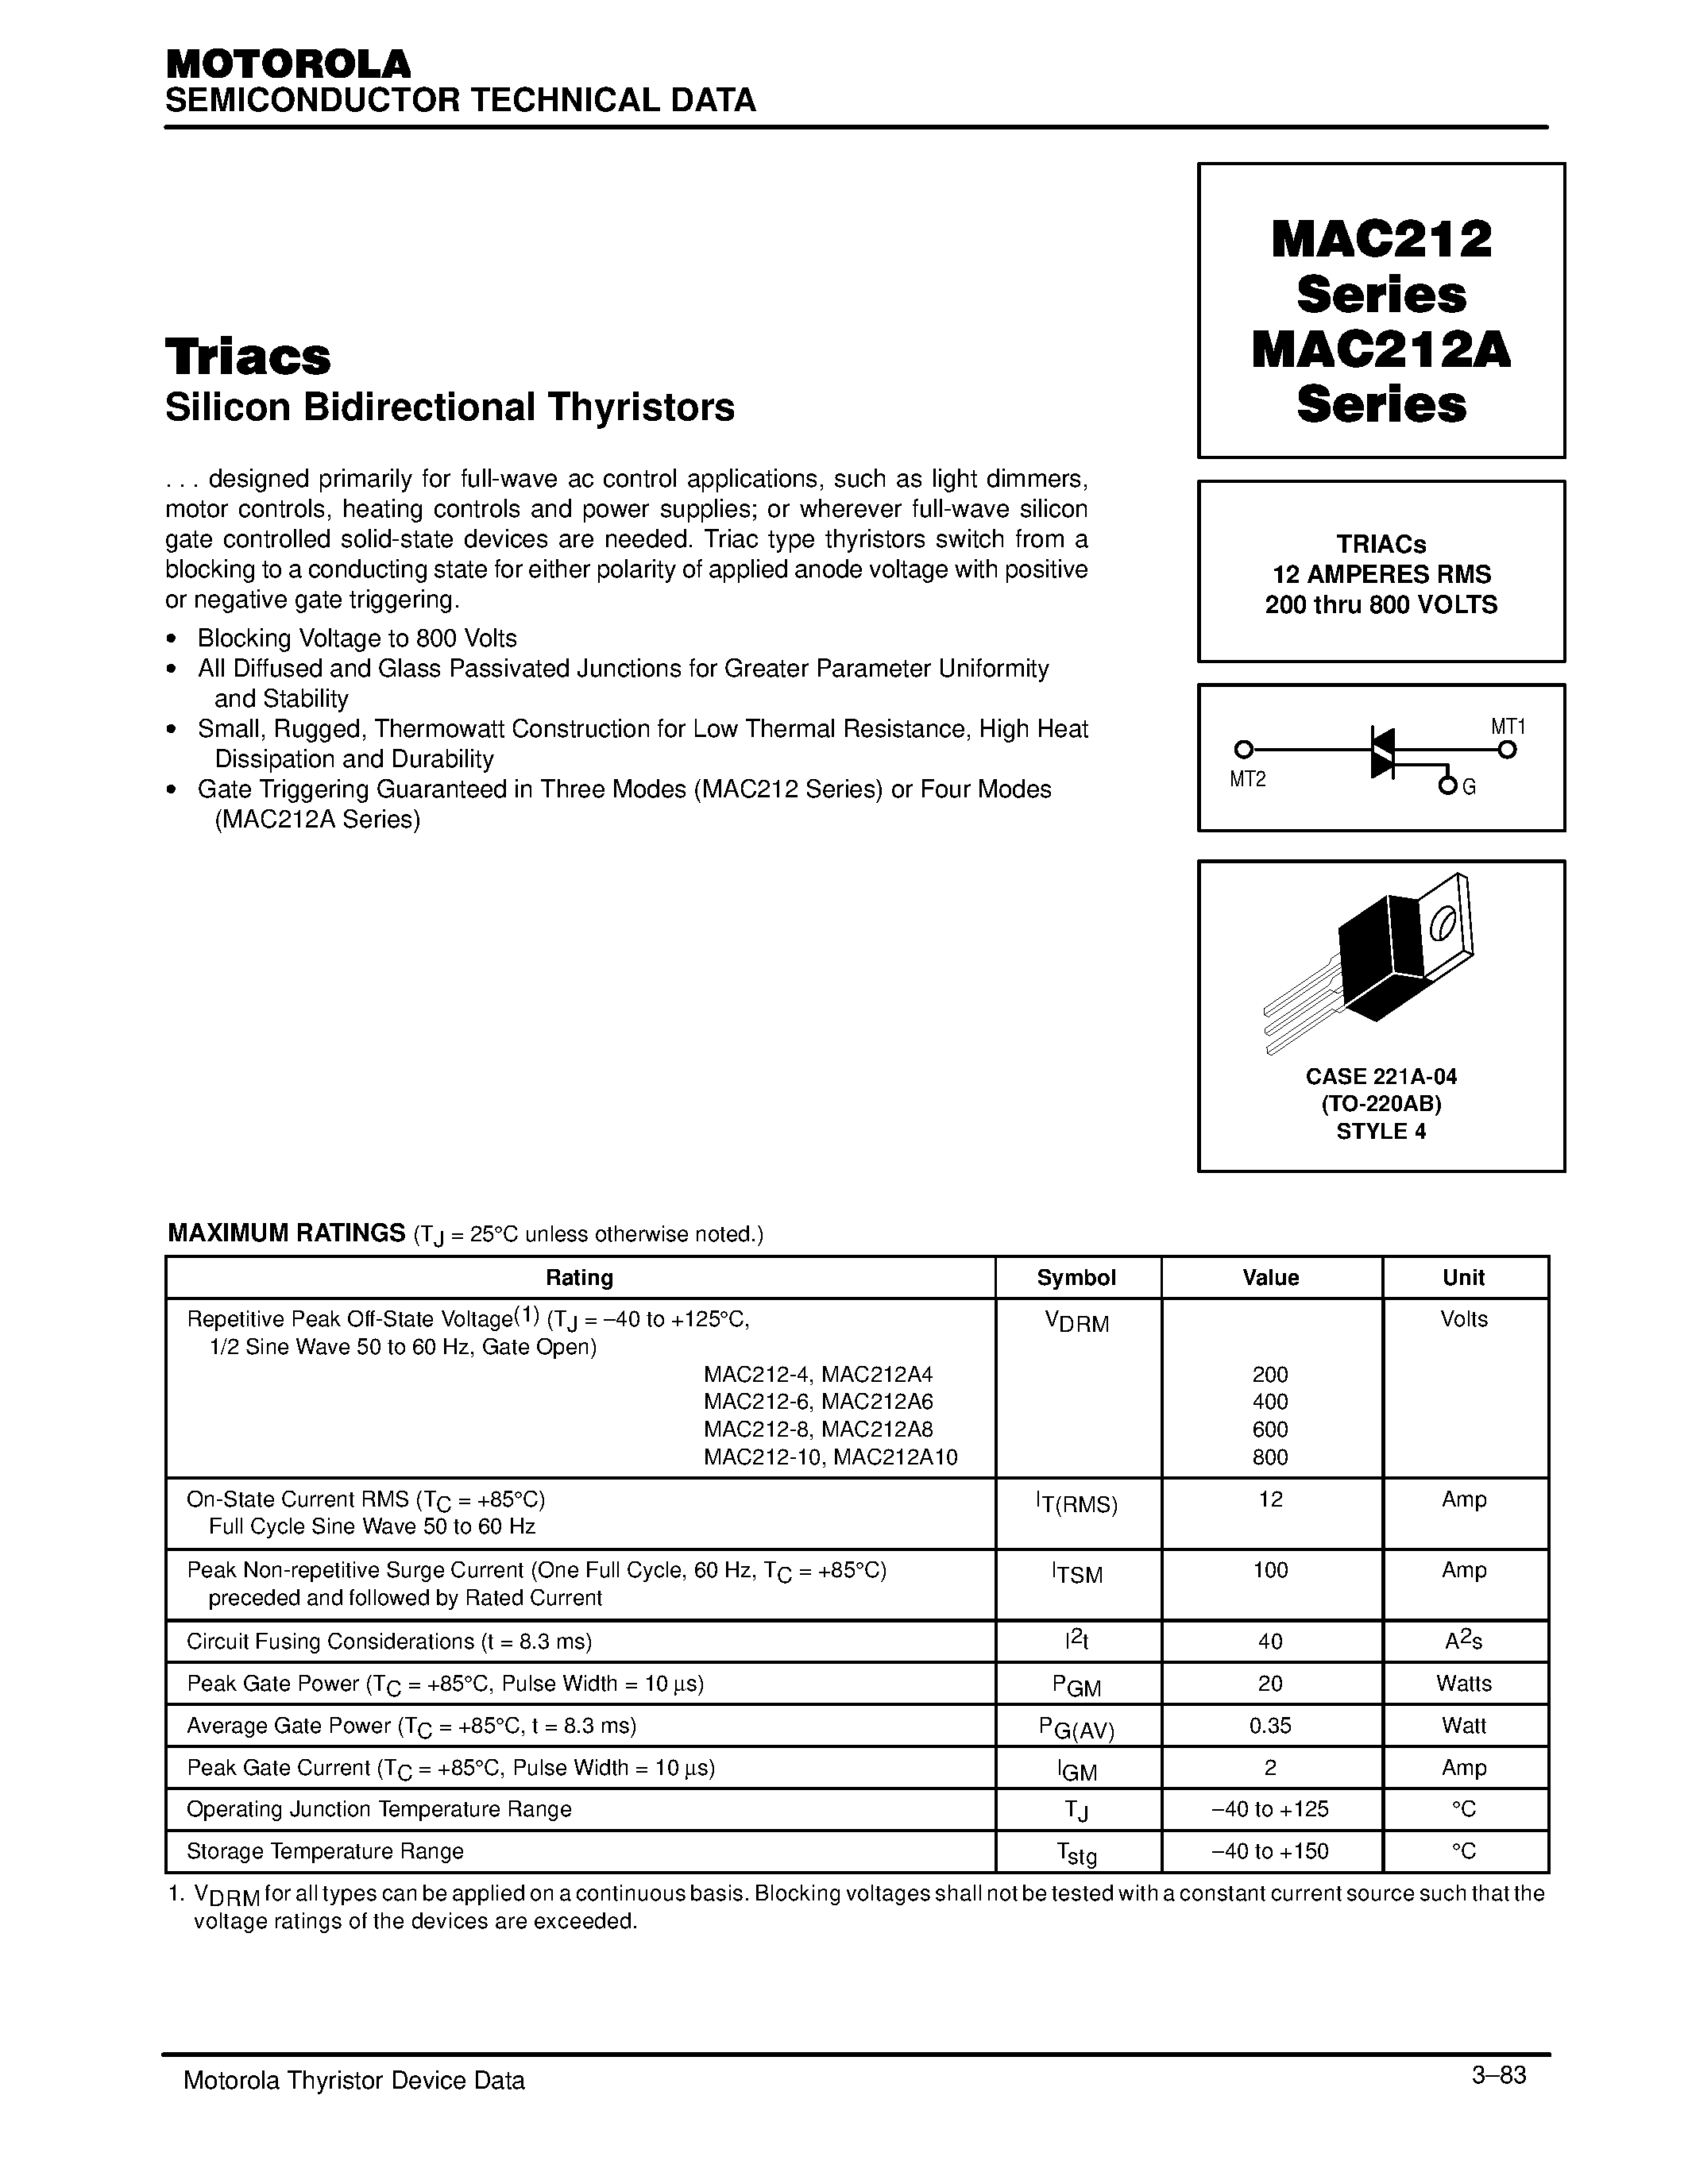 Datasheet MAC212A10 - TRIACs 12 AMPERES RMS 200 thru 800 VOLTS page 1